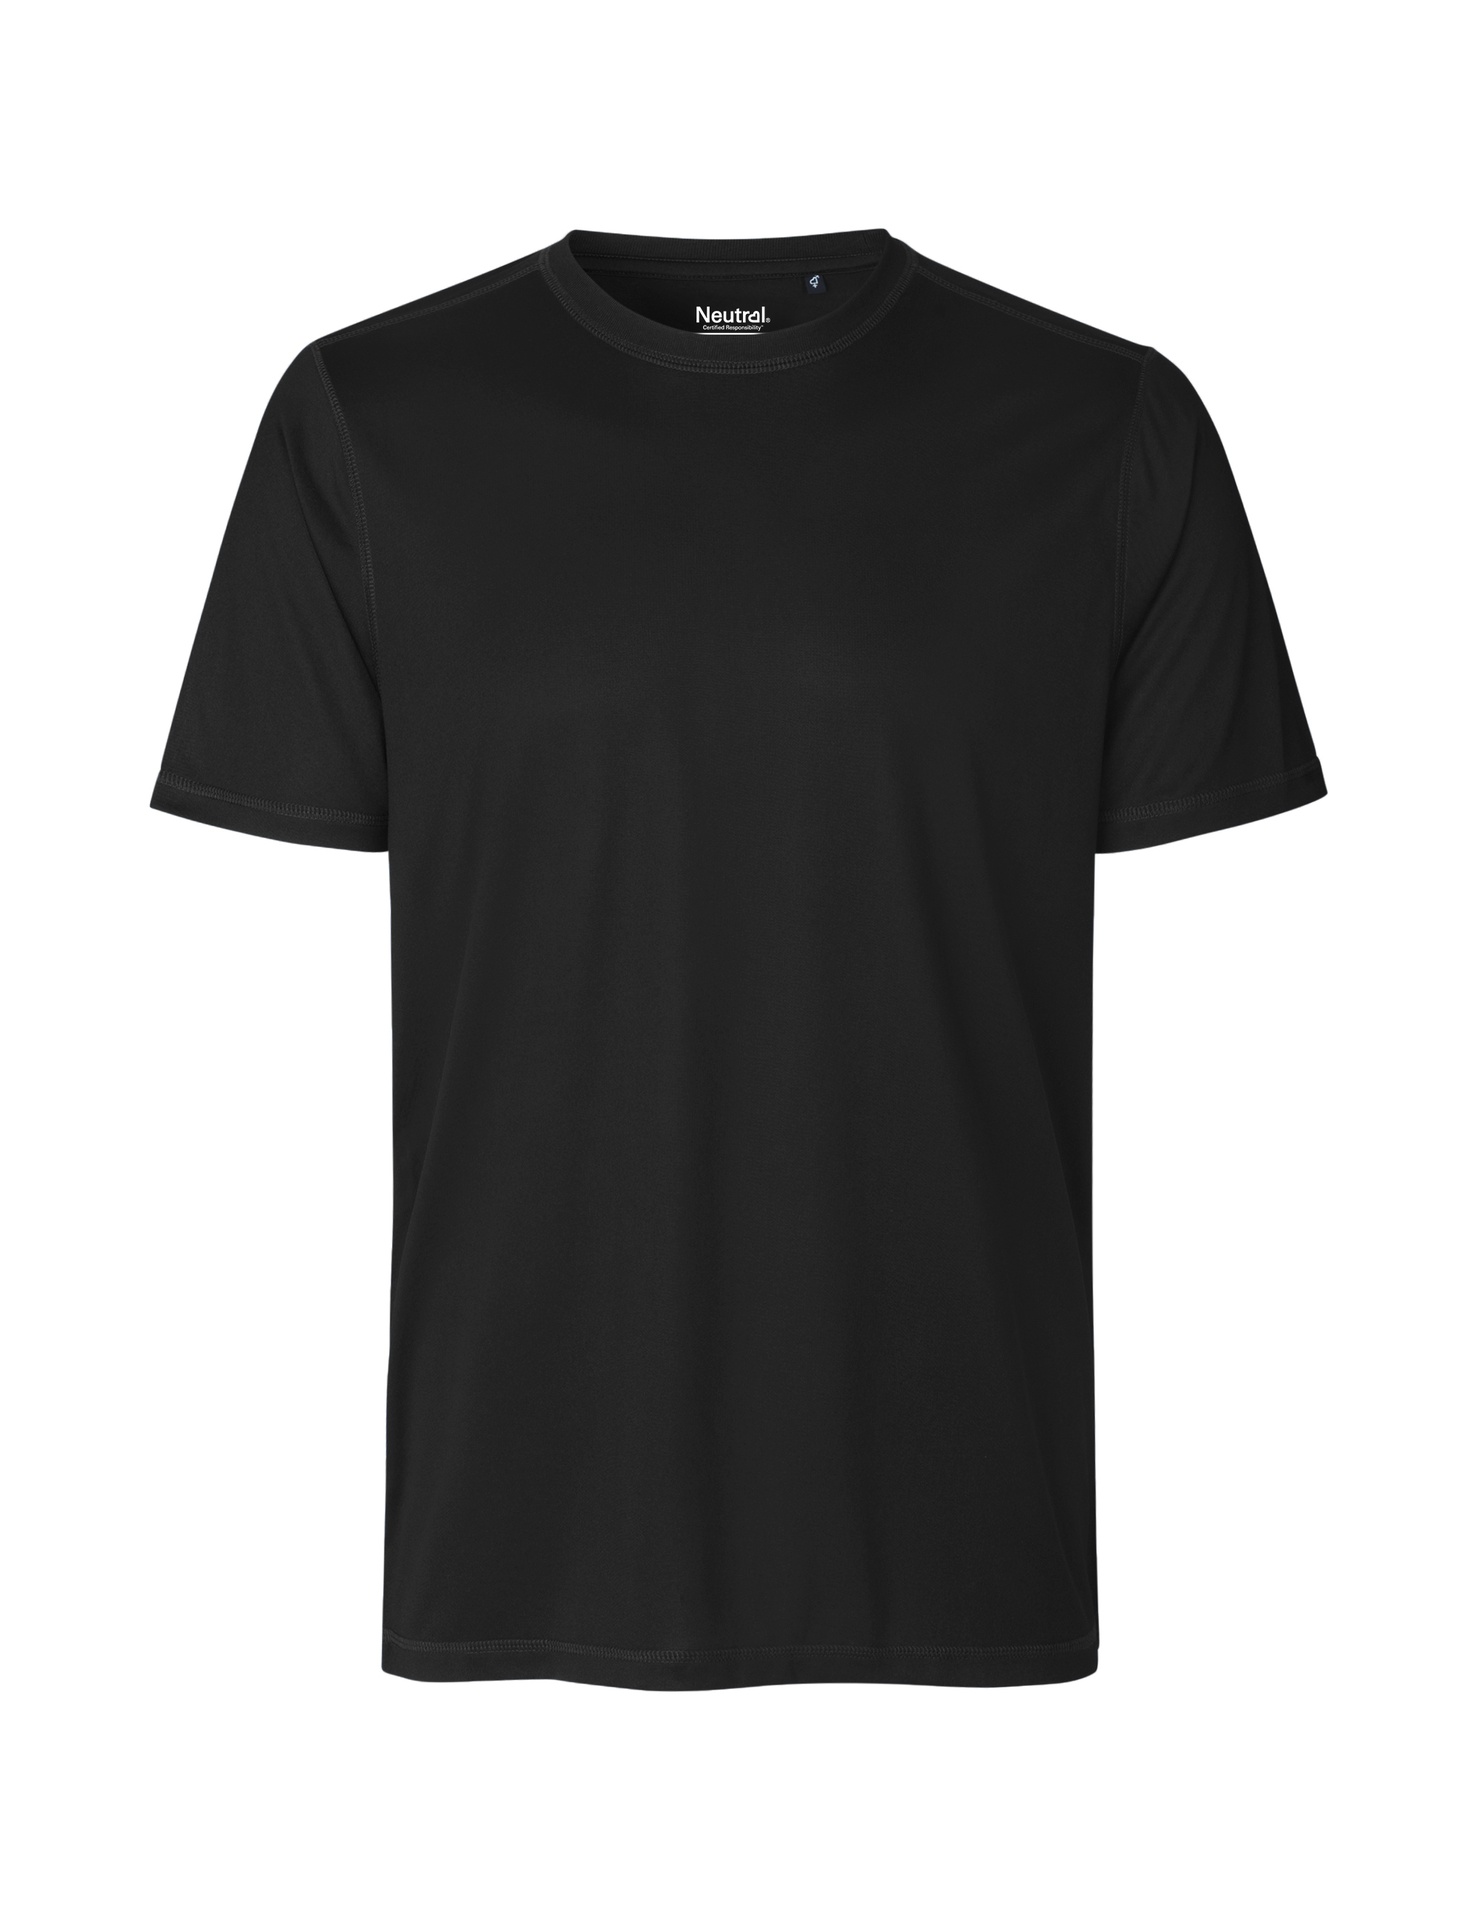 [PR/03754] Recycled Performance T-Shirt (Black 03, S)